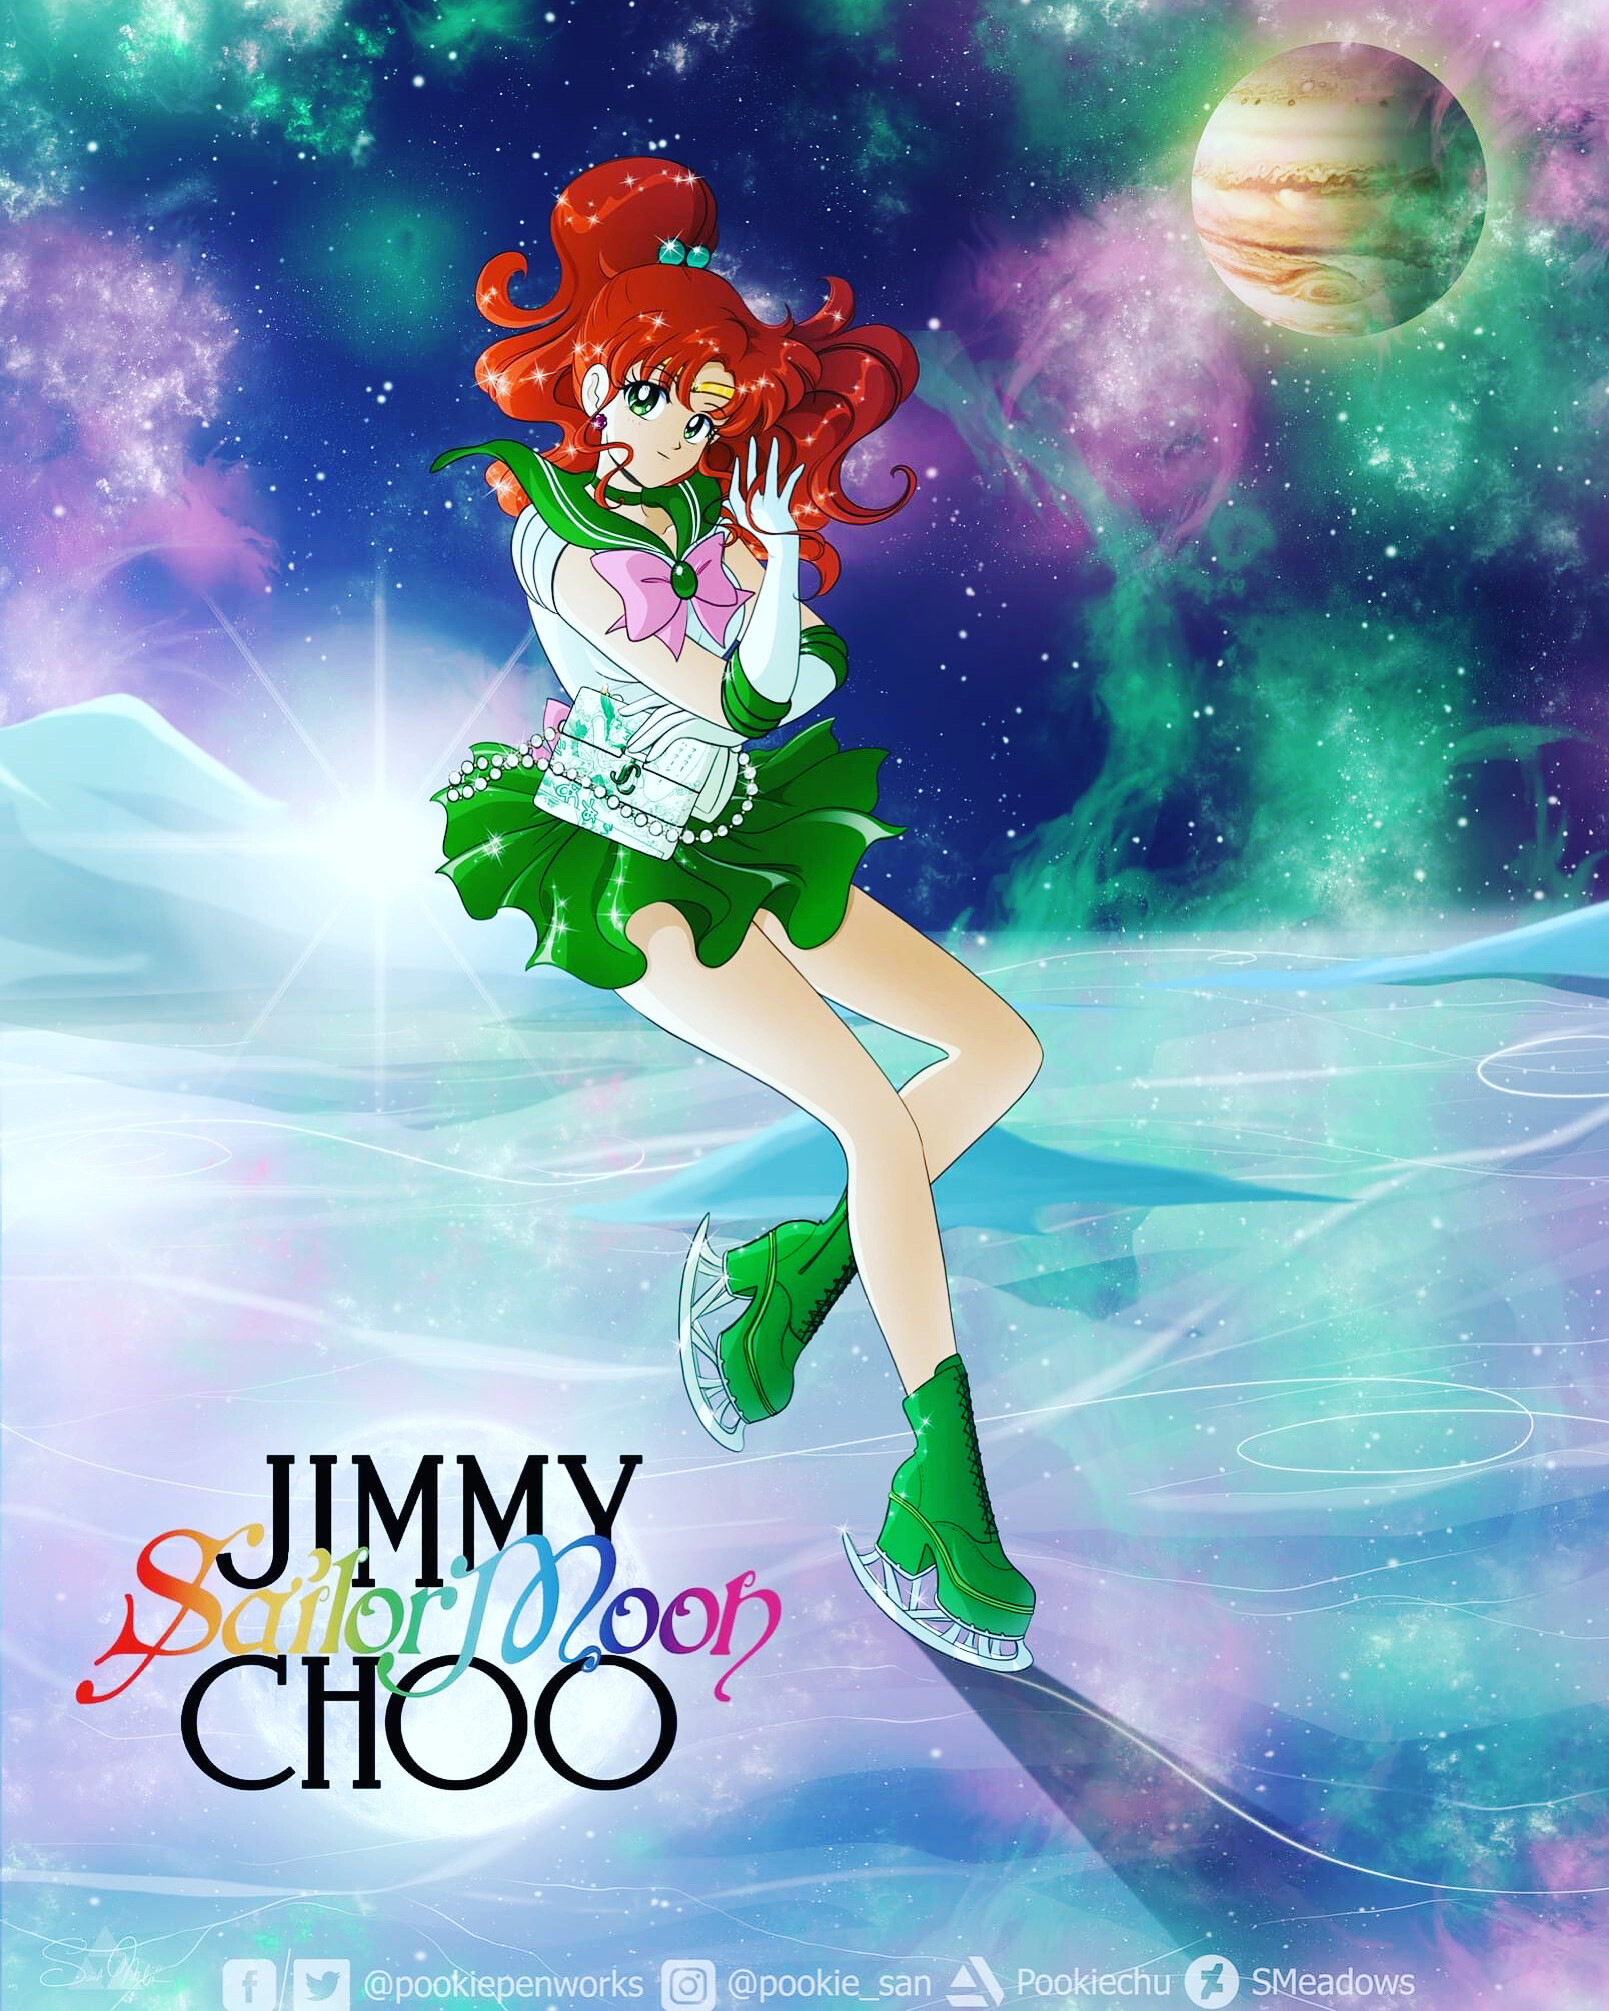 ArtStation - Jimmy Choo Sailor Moon